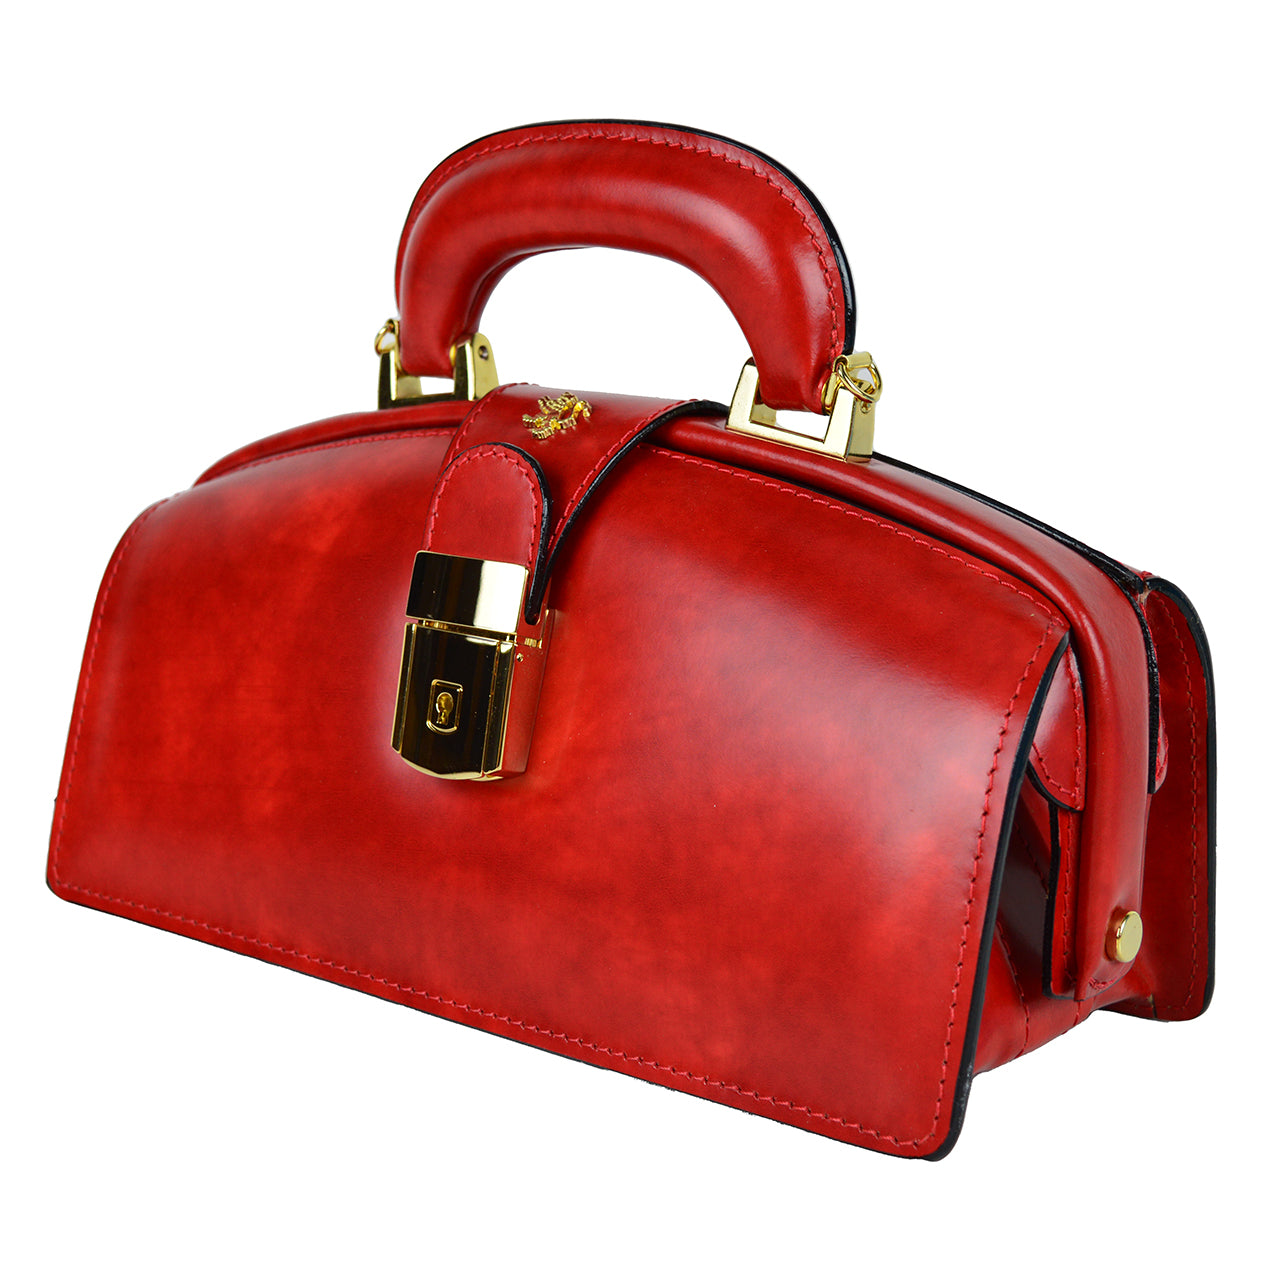 Pratesi Lady Brunelleschi Bag in genuine Italian leather